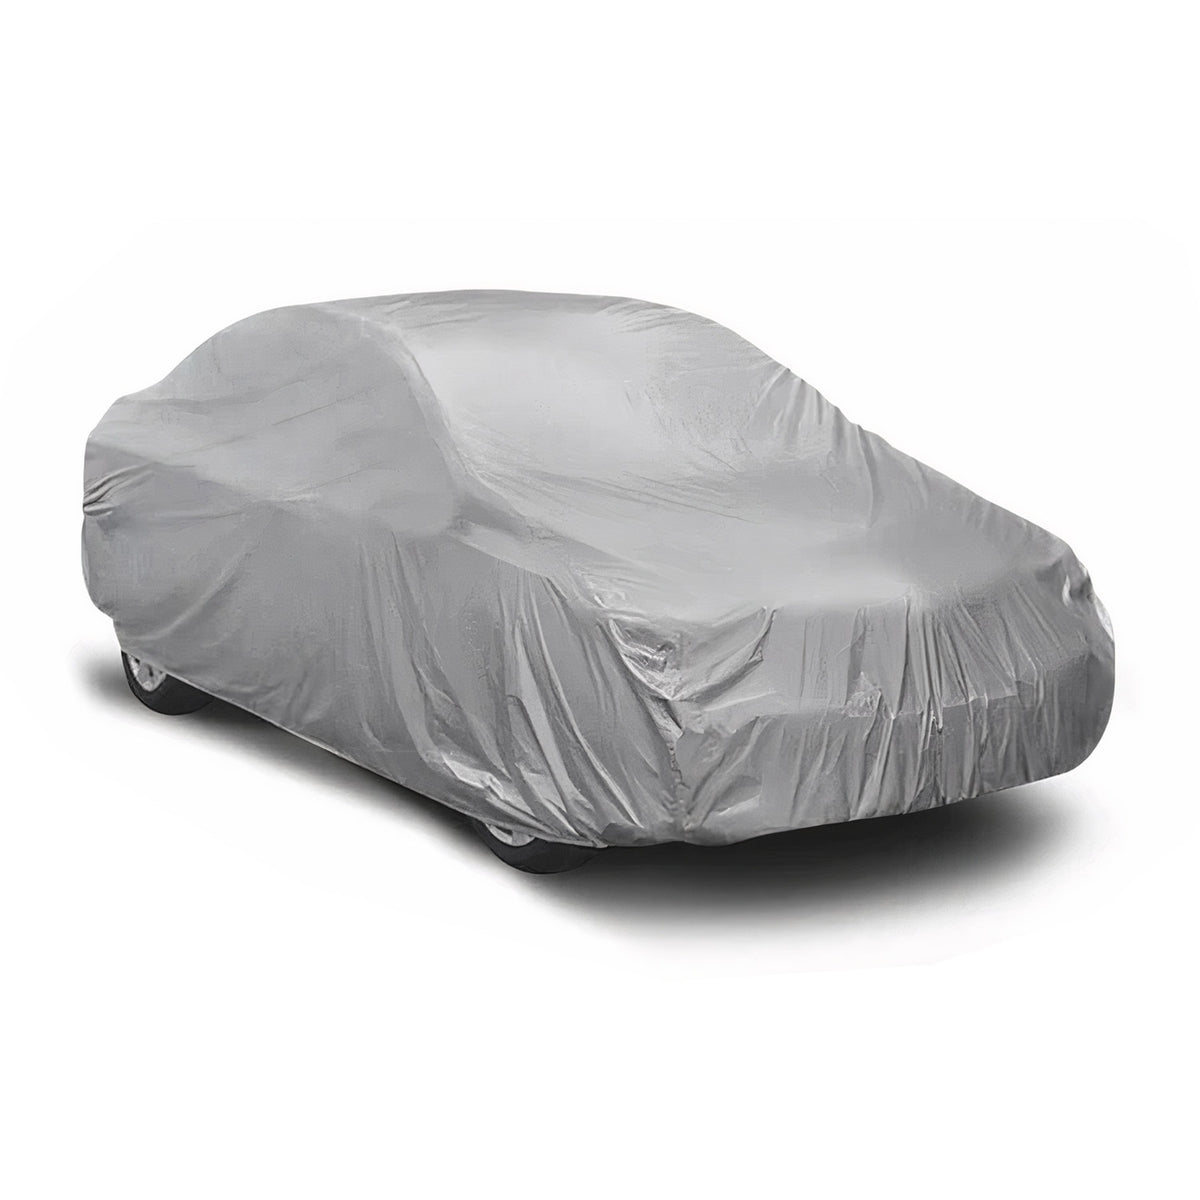 Car protective cover full garage tarpaulin for station wagon cars gray medium